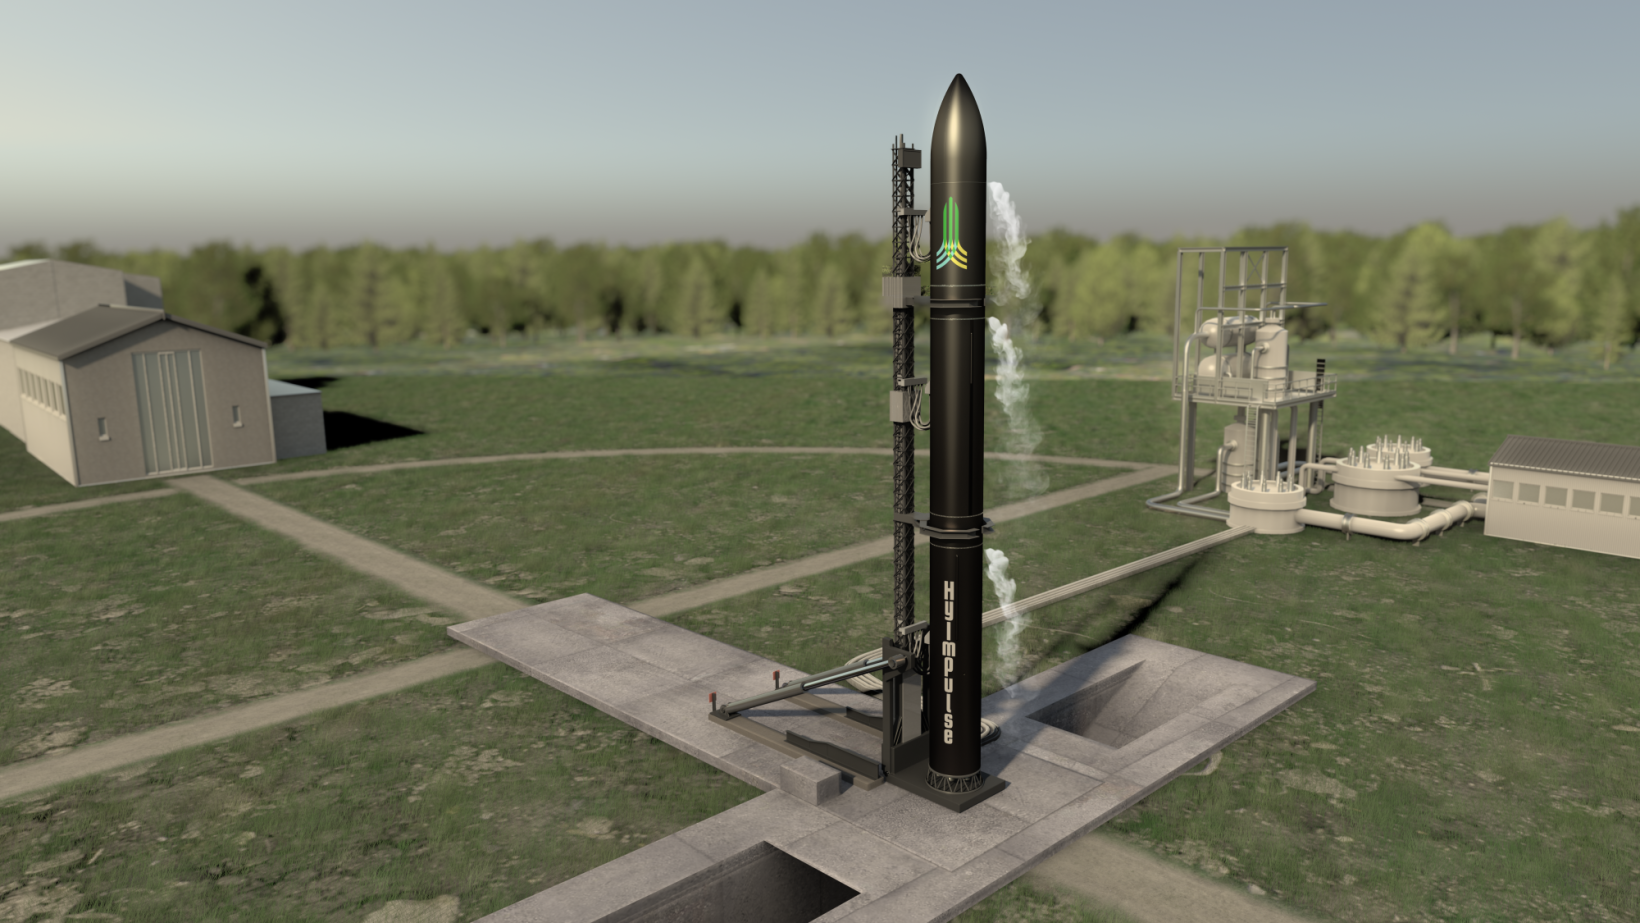 The Hyimpulse SR75 rocket on a launchpad